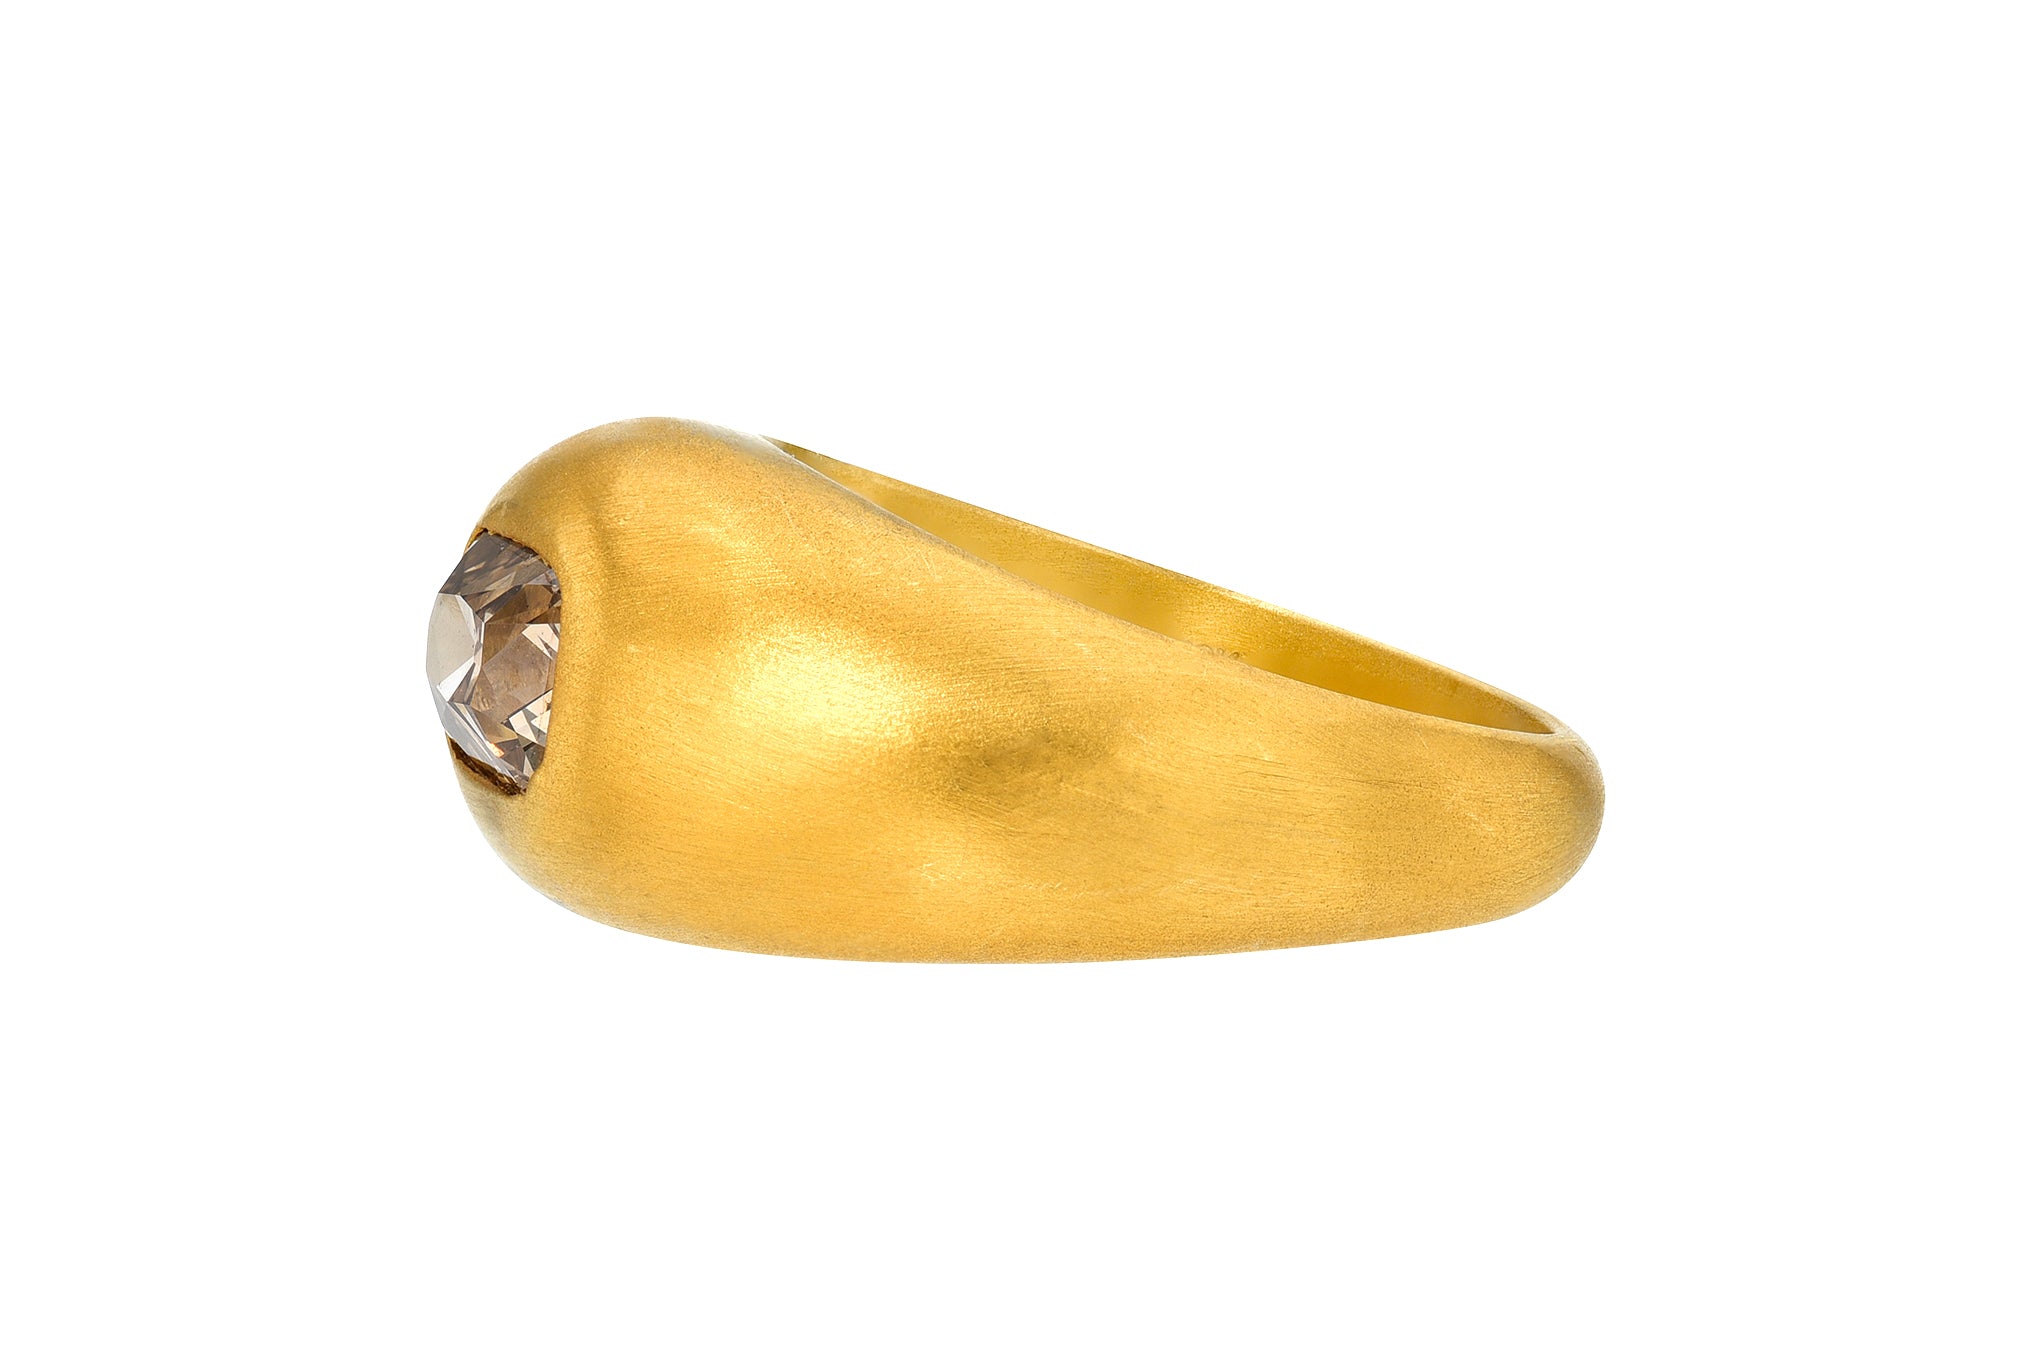 Darius Jewels antique brown diamond gem signet ring cushion cut 